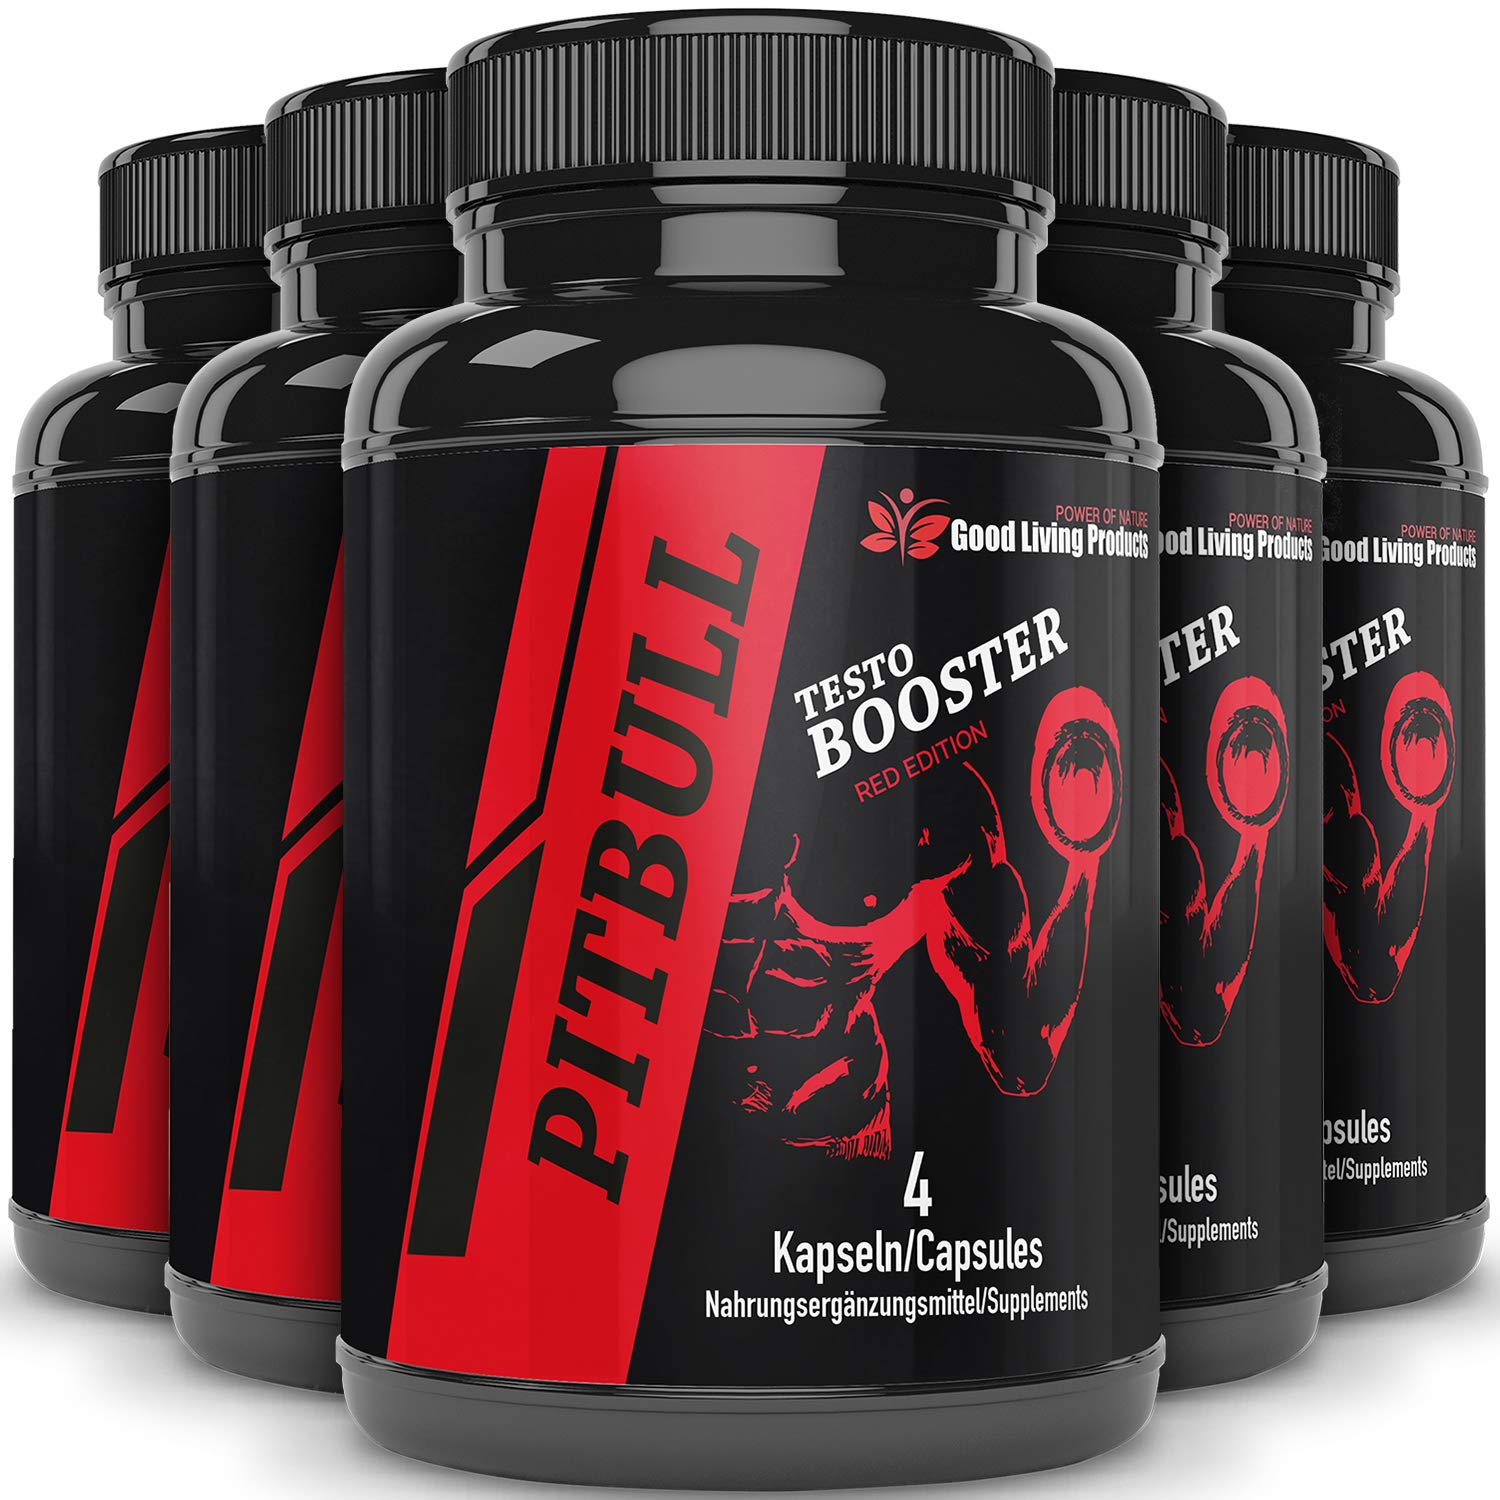 Pitbull Testo Booster – Red Edition – Pre Workout Booster Muskelaufbau (5 Dosen je 4 Kapseln) – Booster Pre Workout Testosteron Booster Fitness